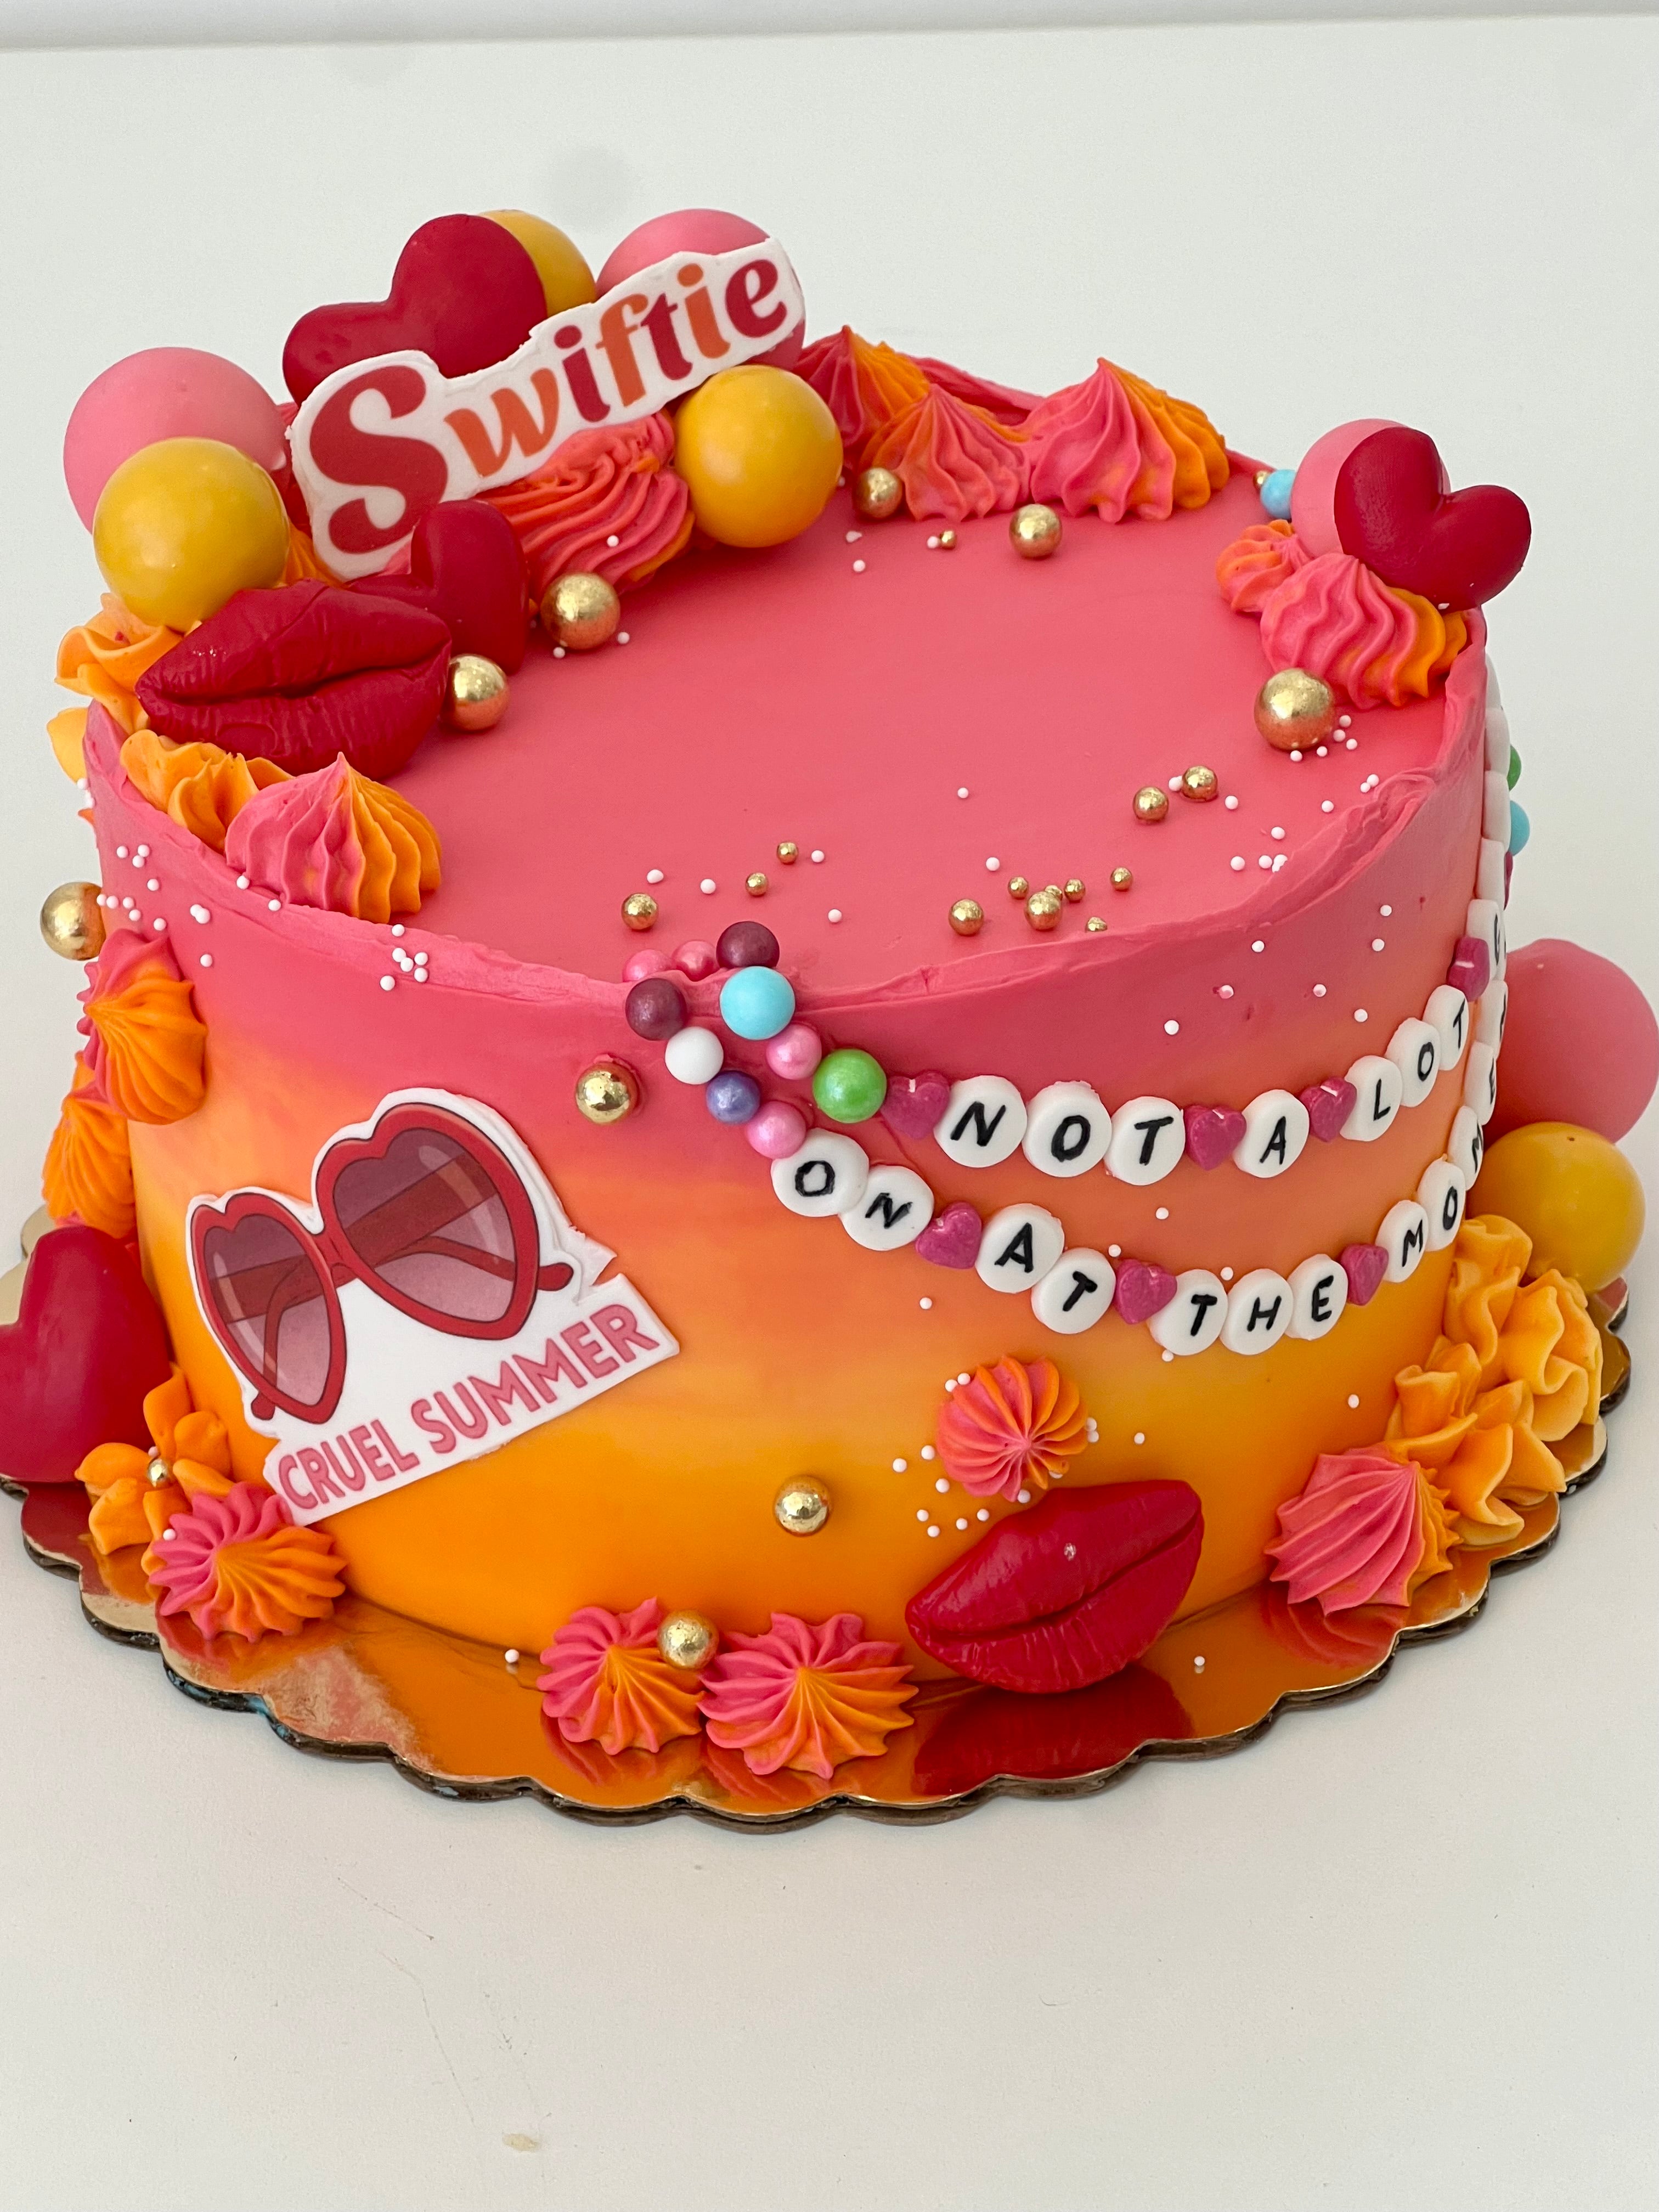 Swiftie Inspired Cake Class